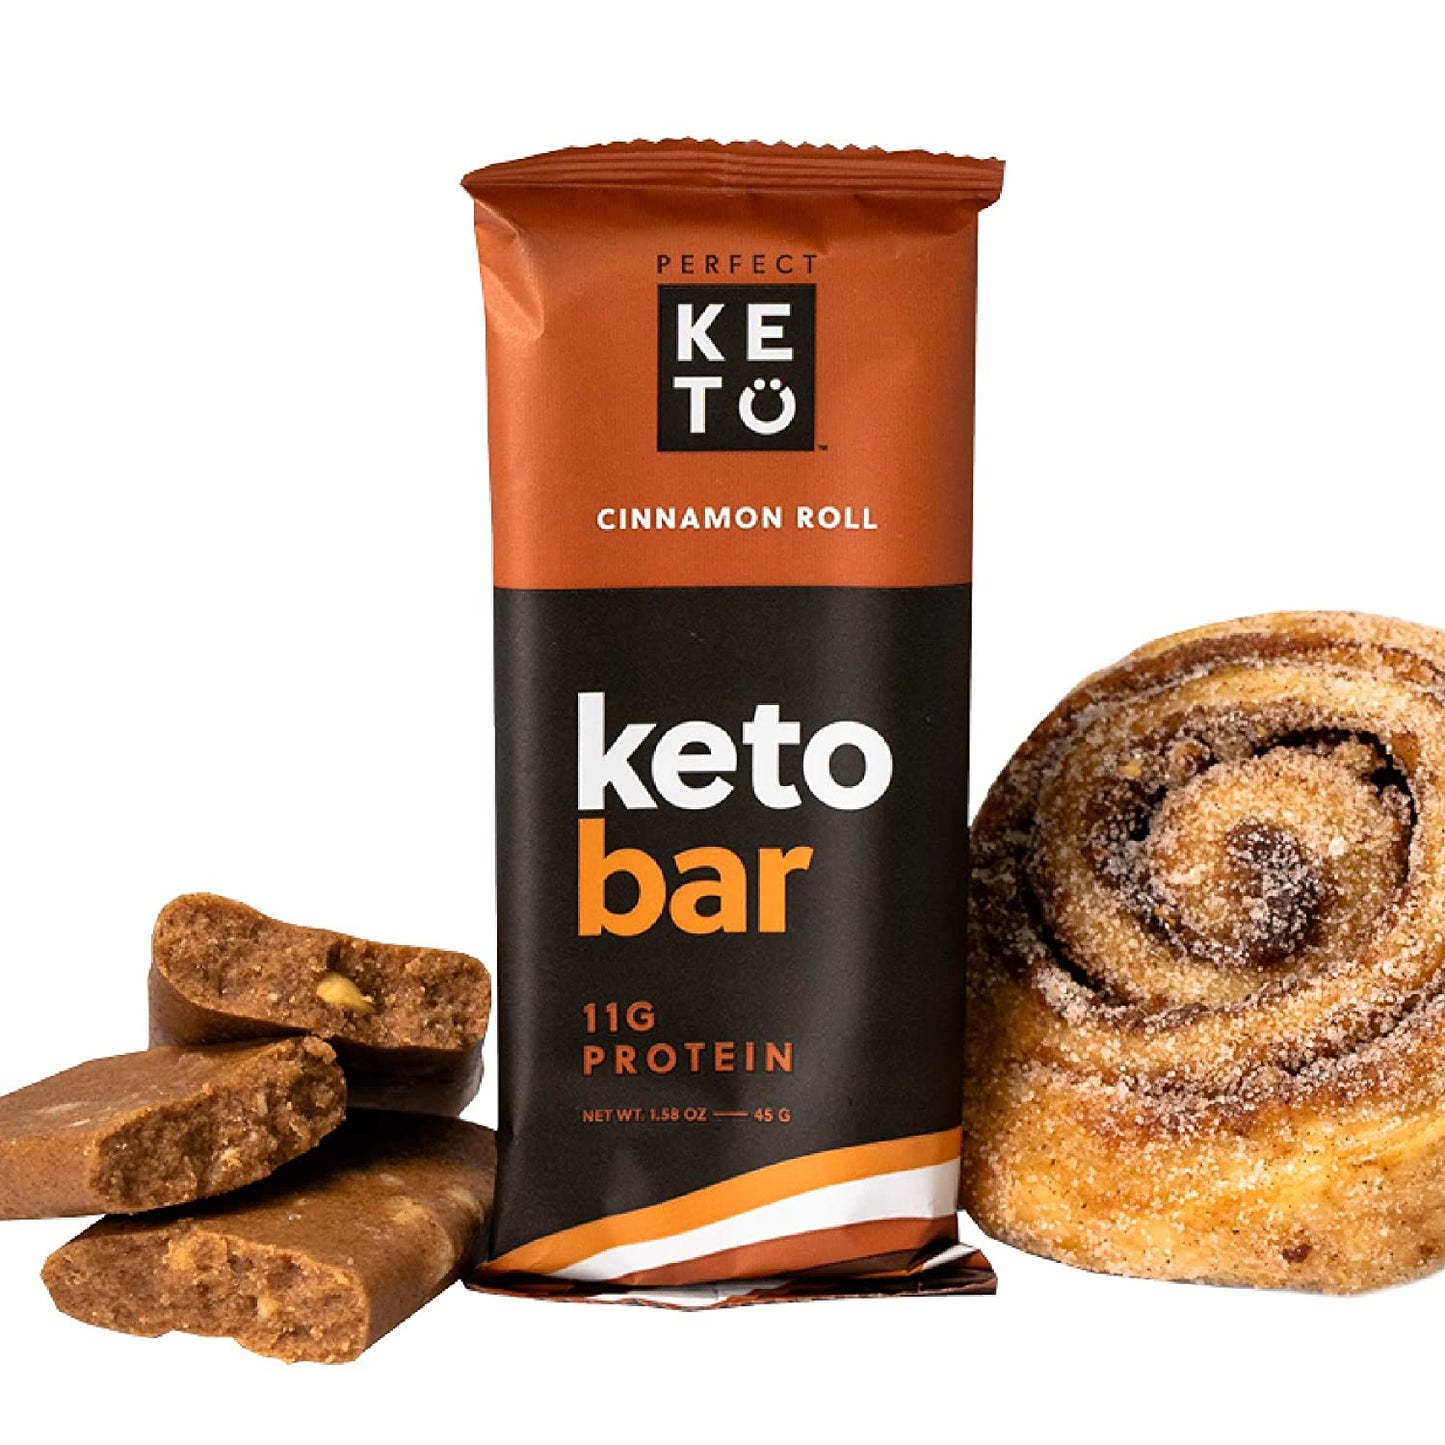 Perfect Keto Bars - Cinnamon Roll - 1 Bar: 3g Net Carbs, 19g Fat, 11g protein - Keto Diet Food Dessert